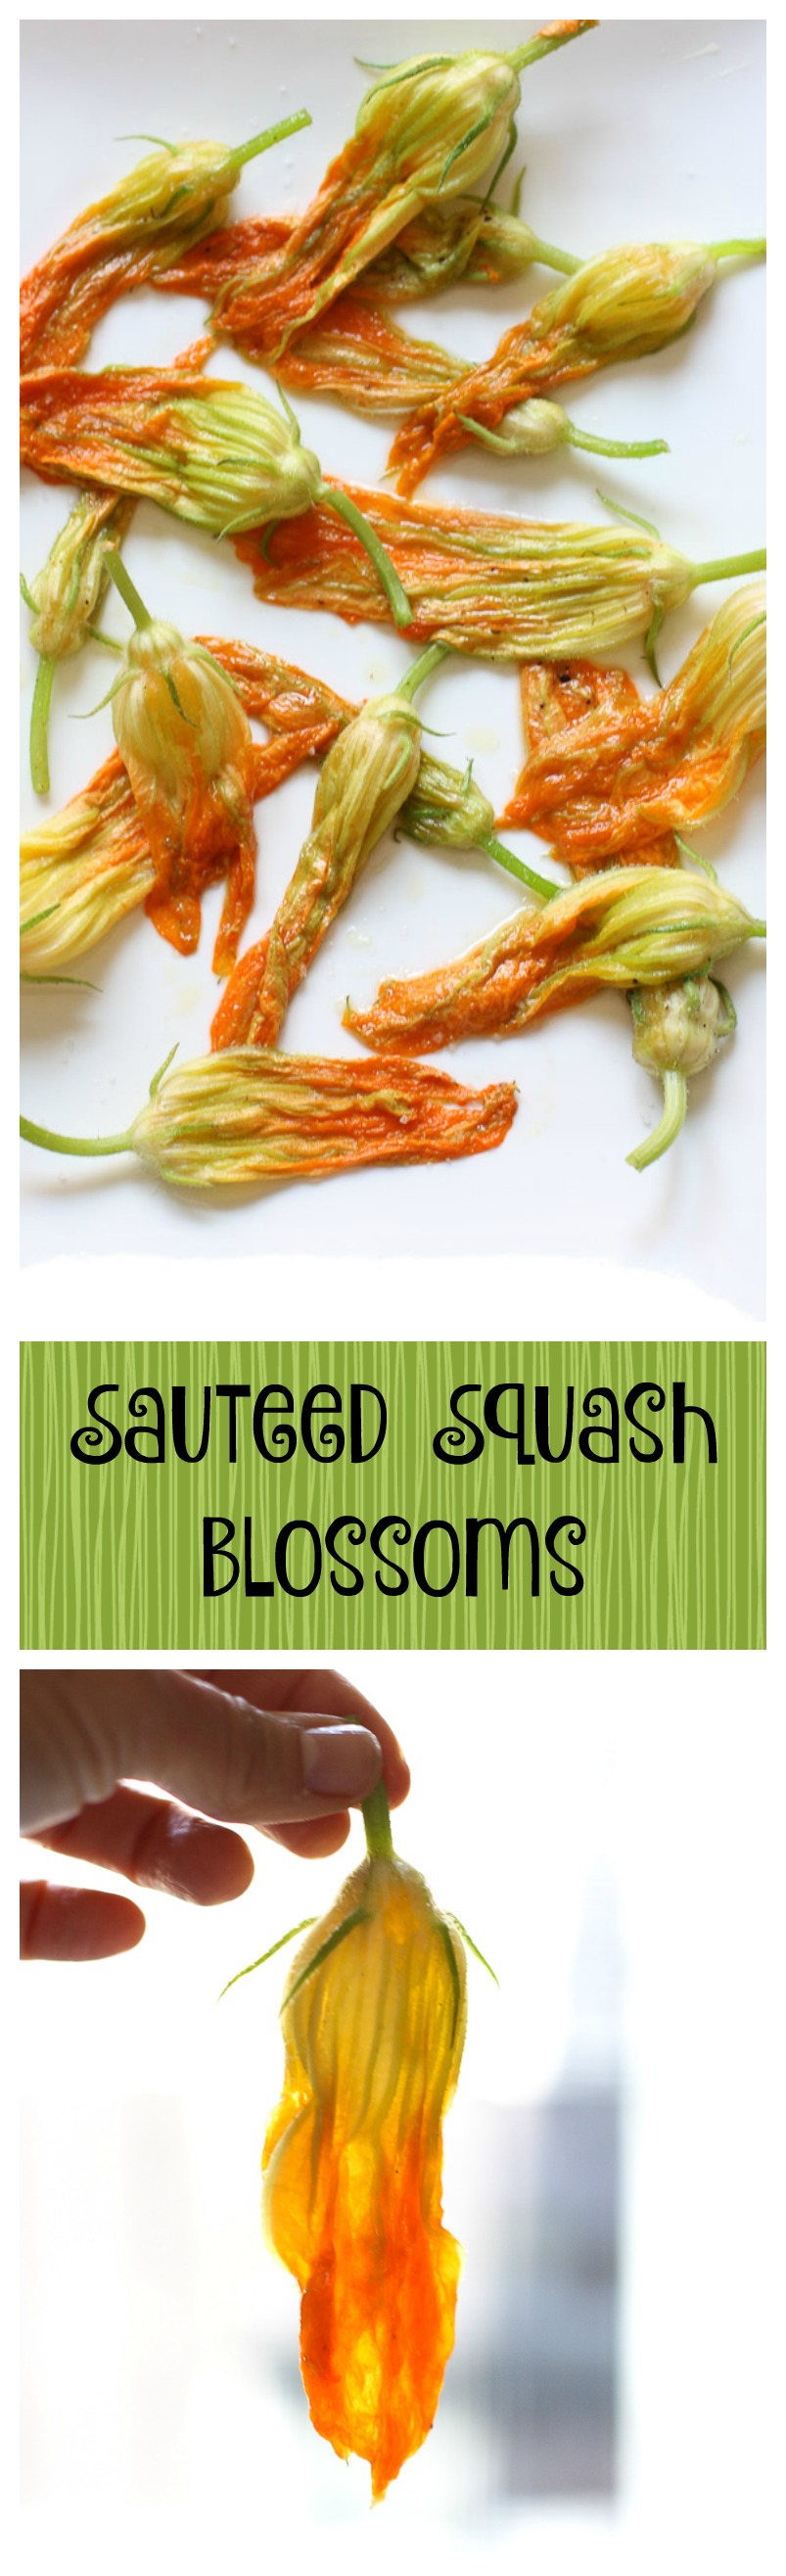 sauteed squash blossoms